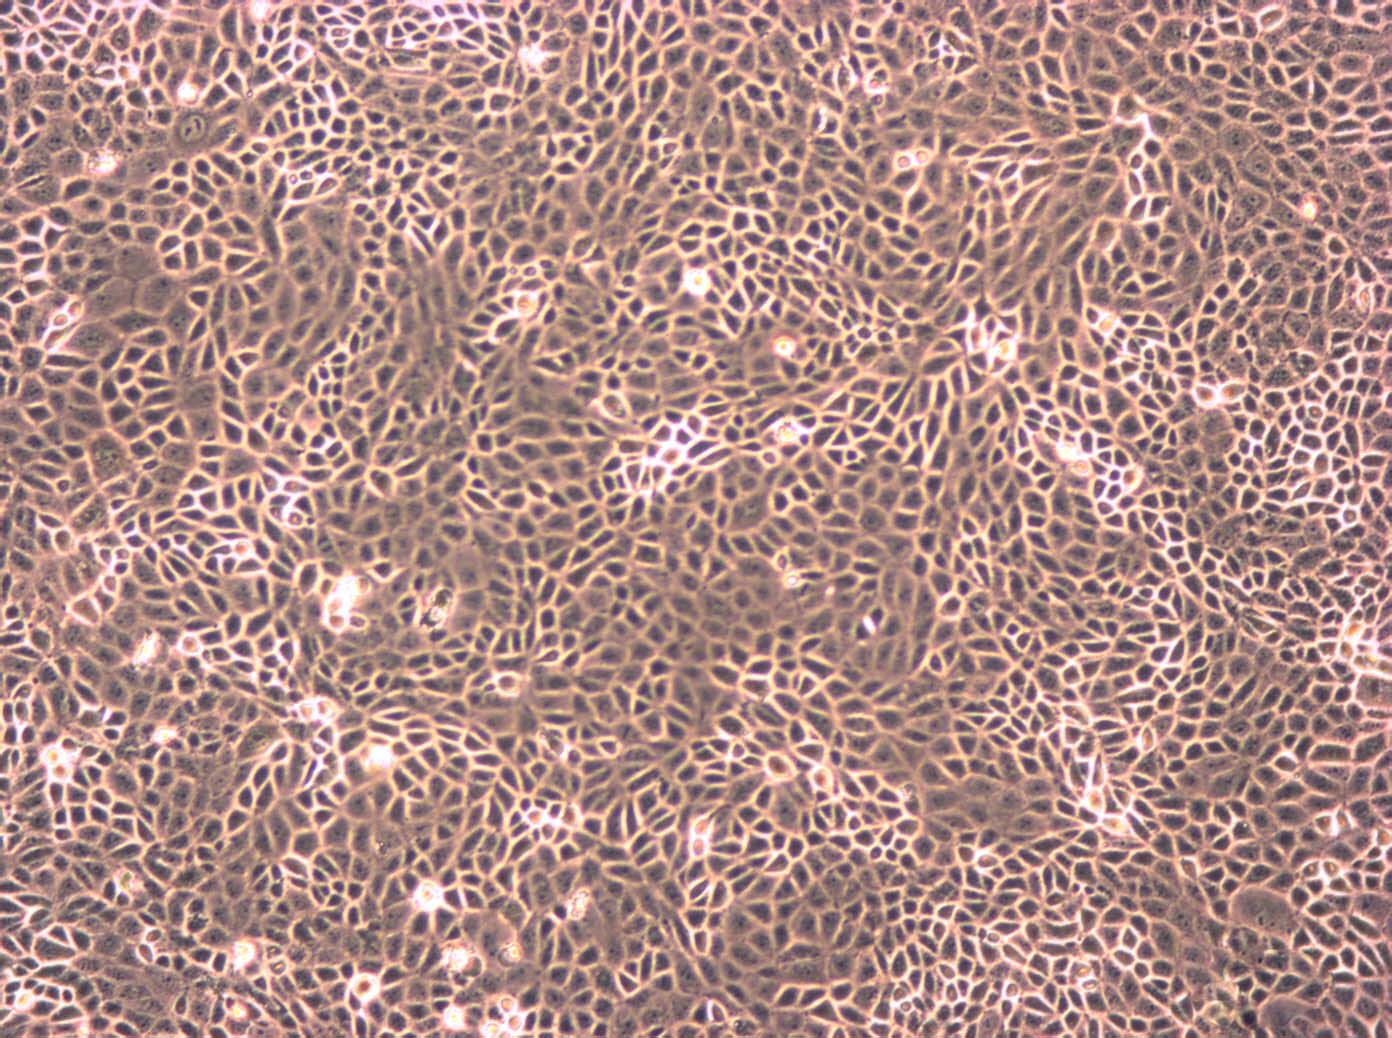 NCI-H1993 Cells|人肺癌需消化细胞系